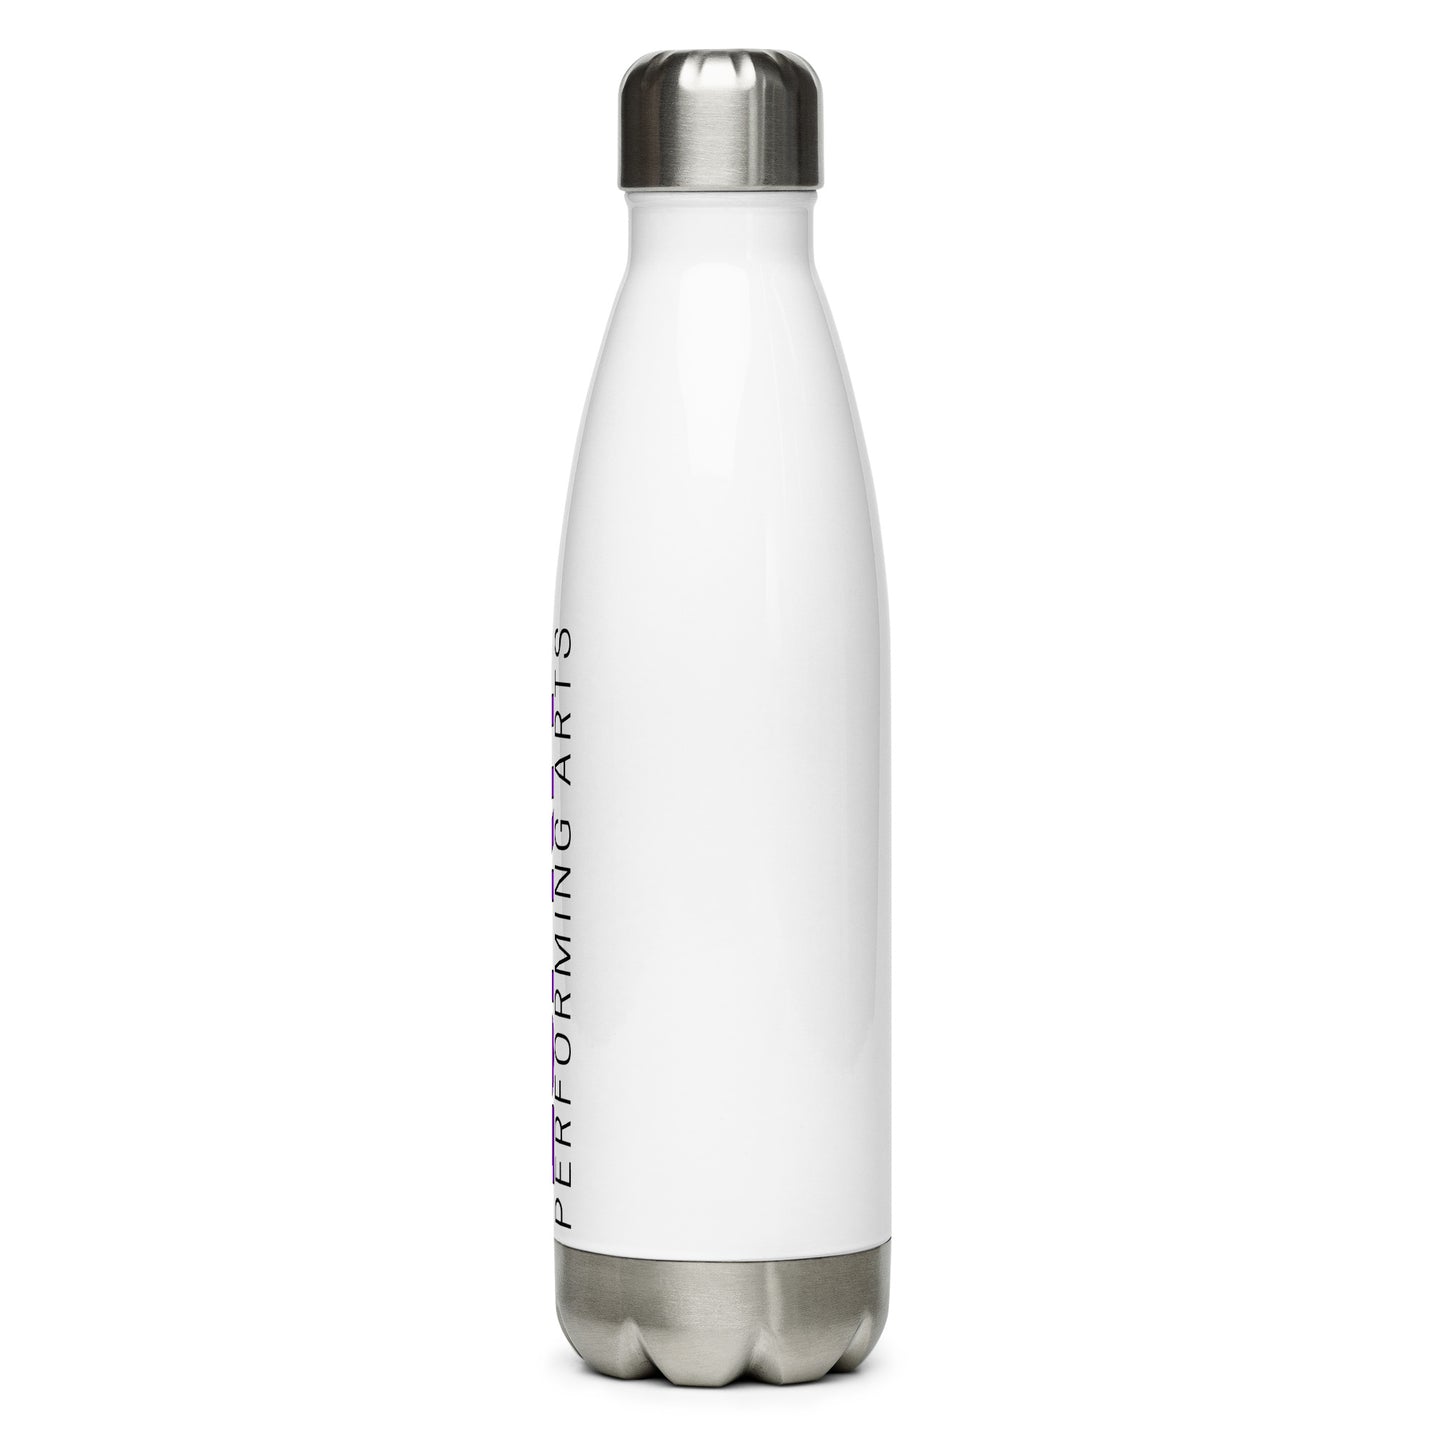 Esprit Performing Arts Stainless Steel Water Bottle